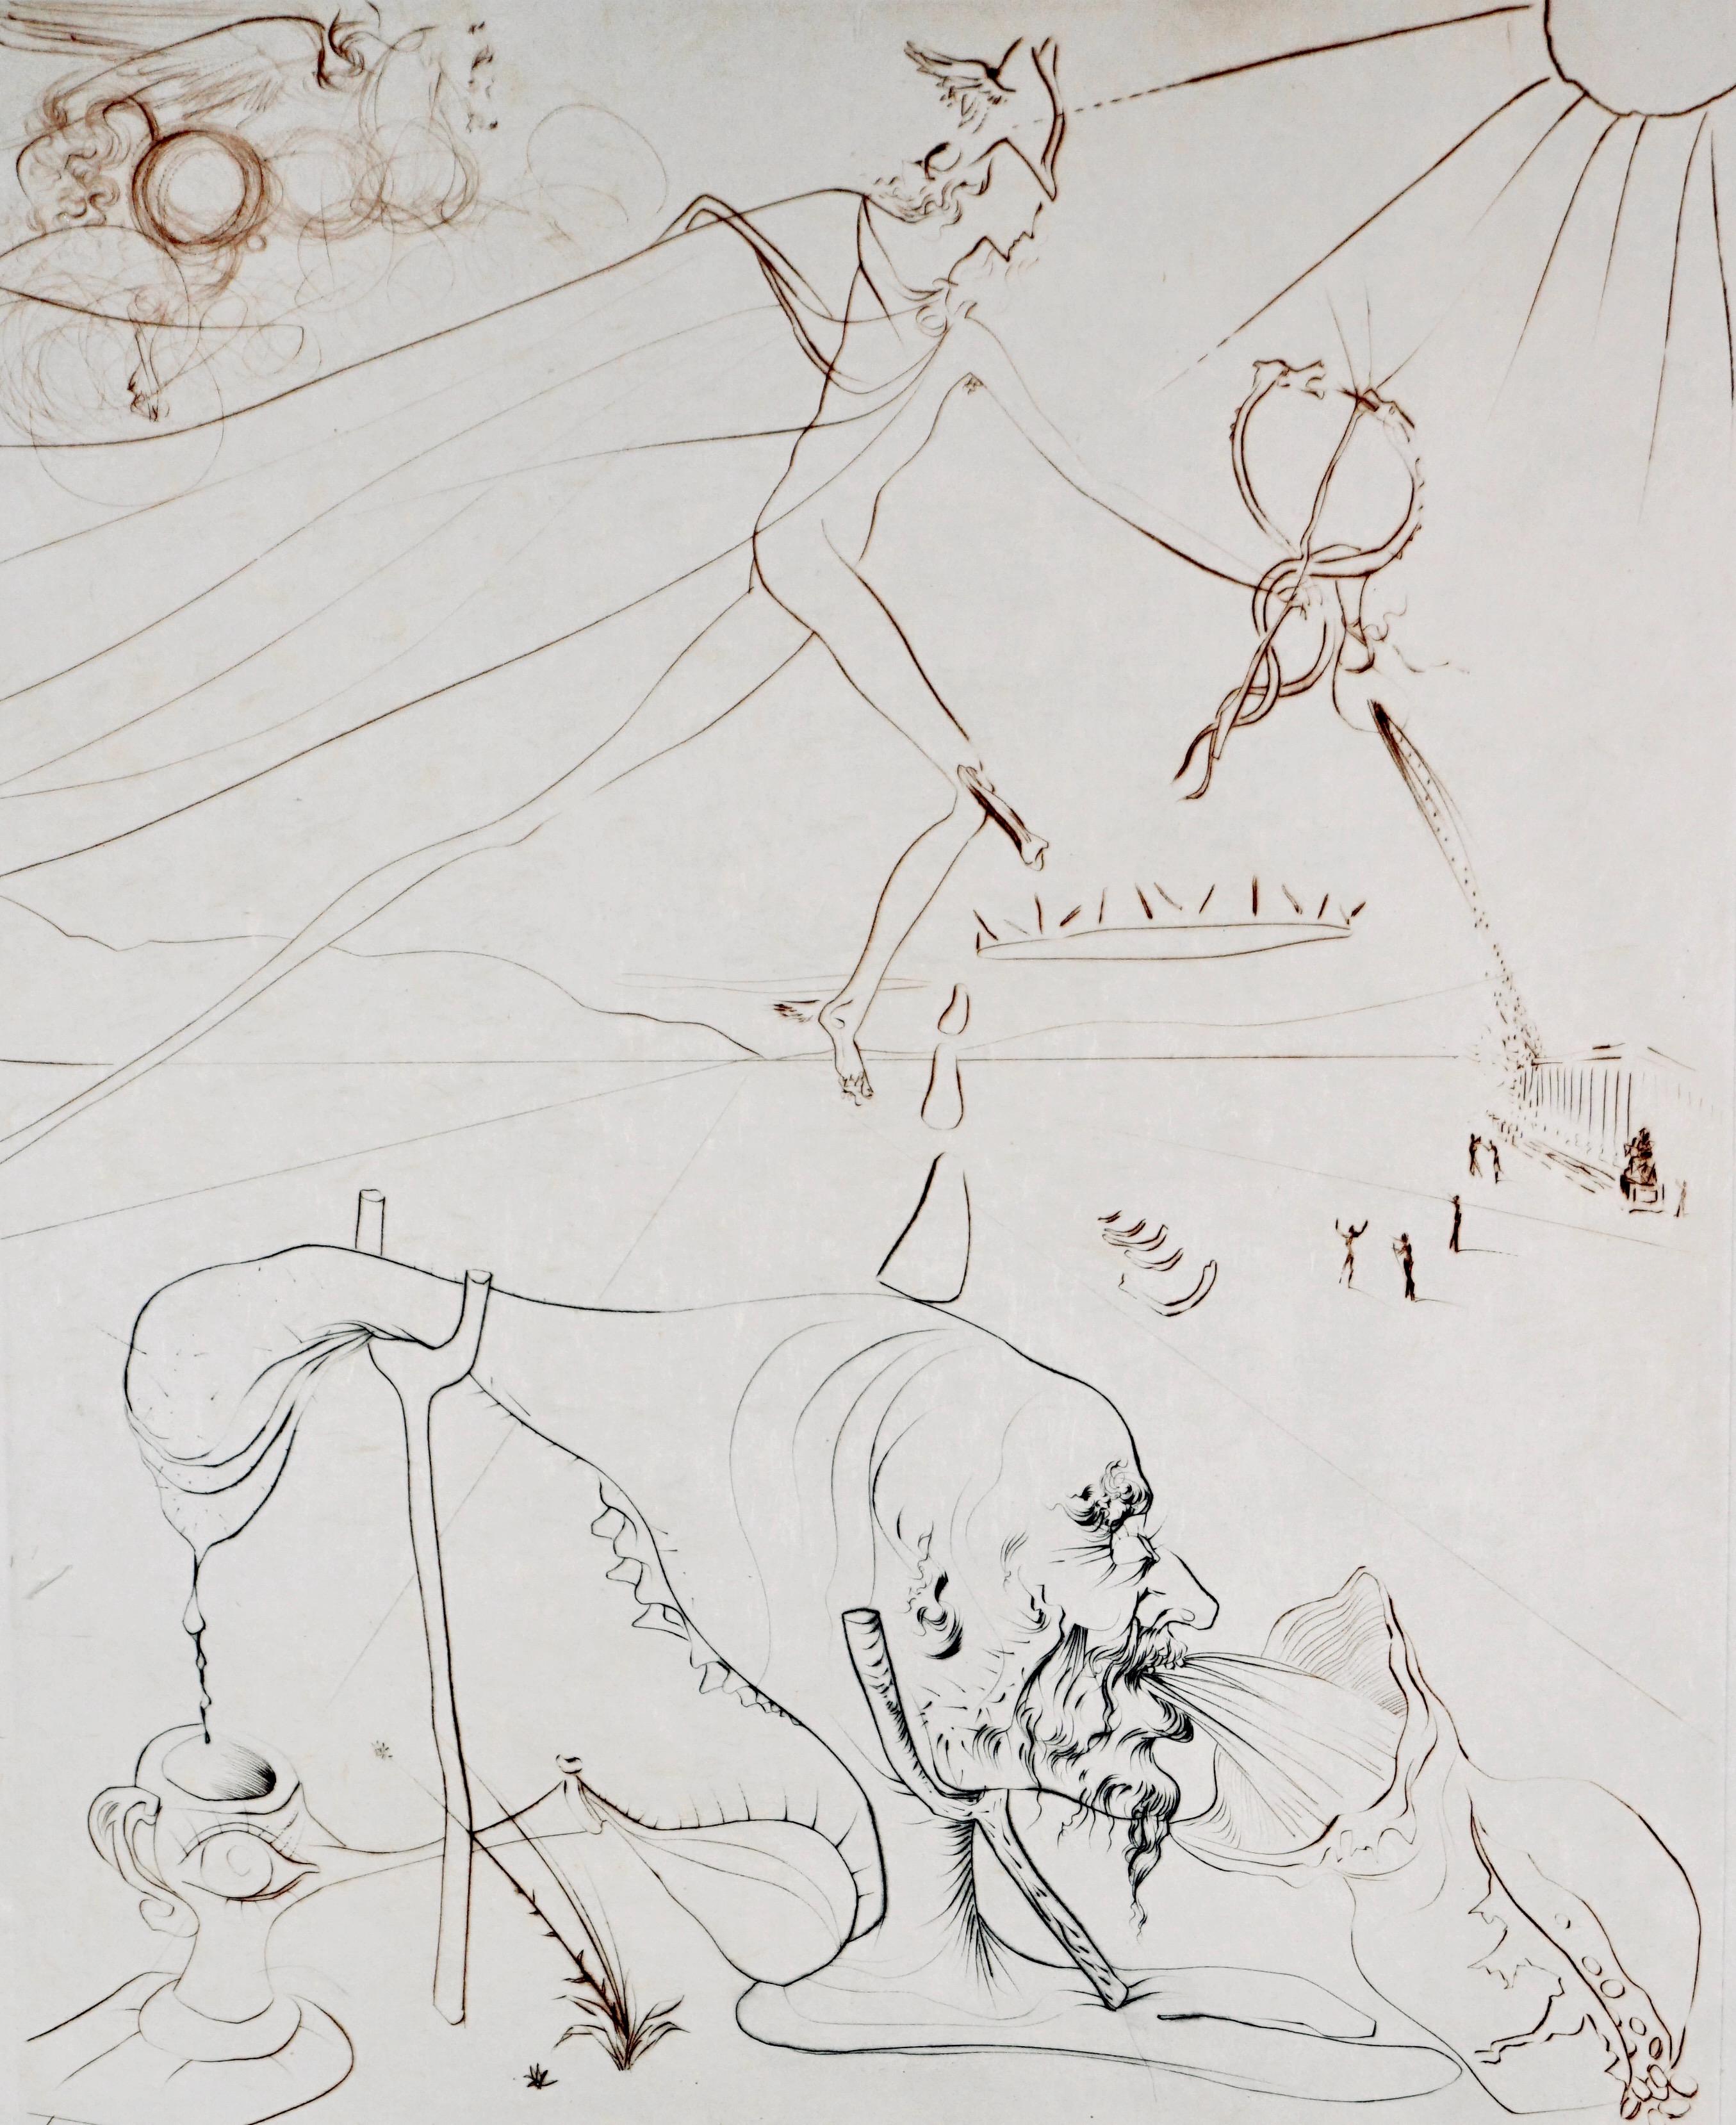 L’Alchimie  - Print by Salvador Dalí